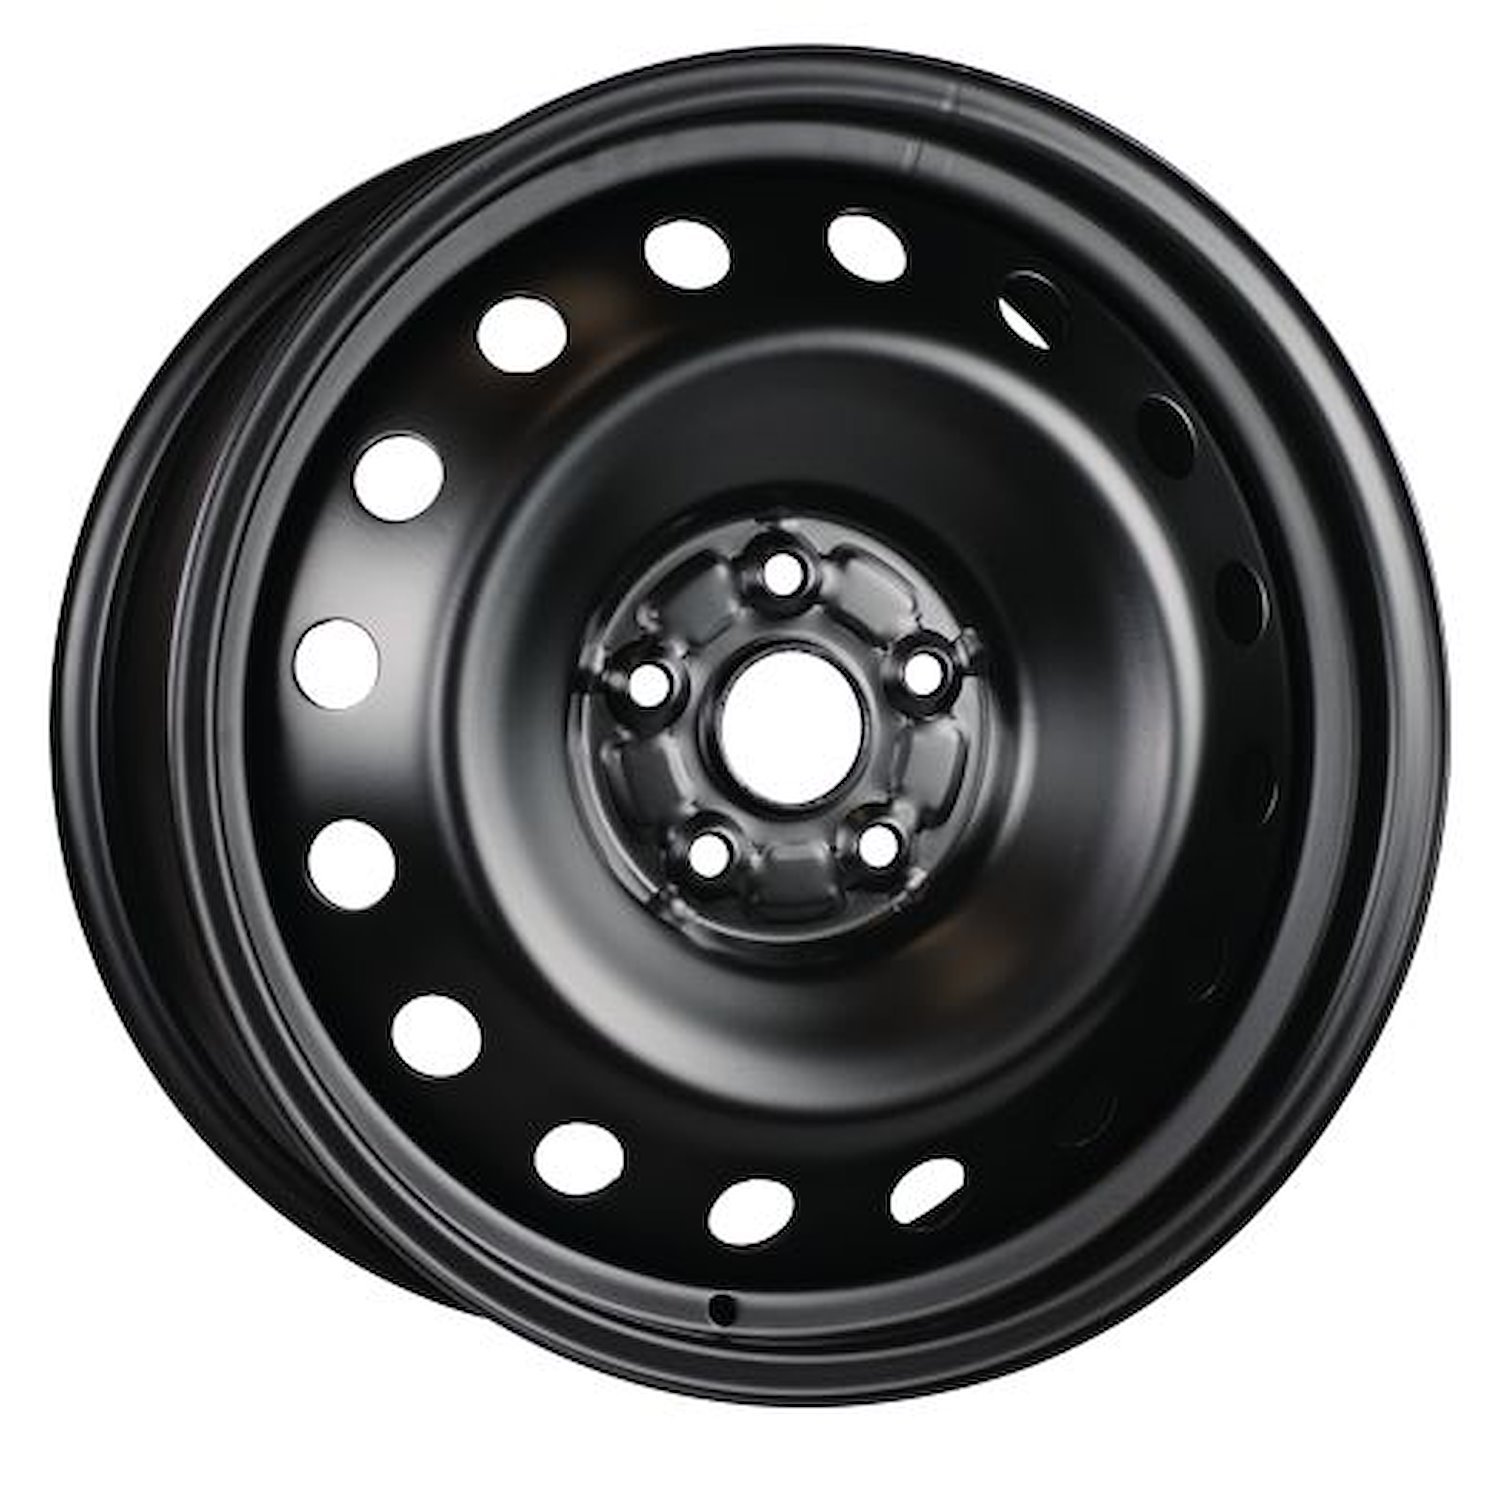 X48556 Steel Wheel [Size: 18" x 7.50"] Black Finish